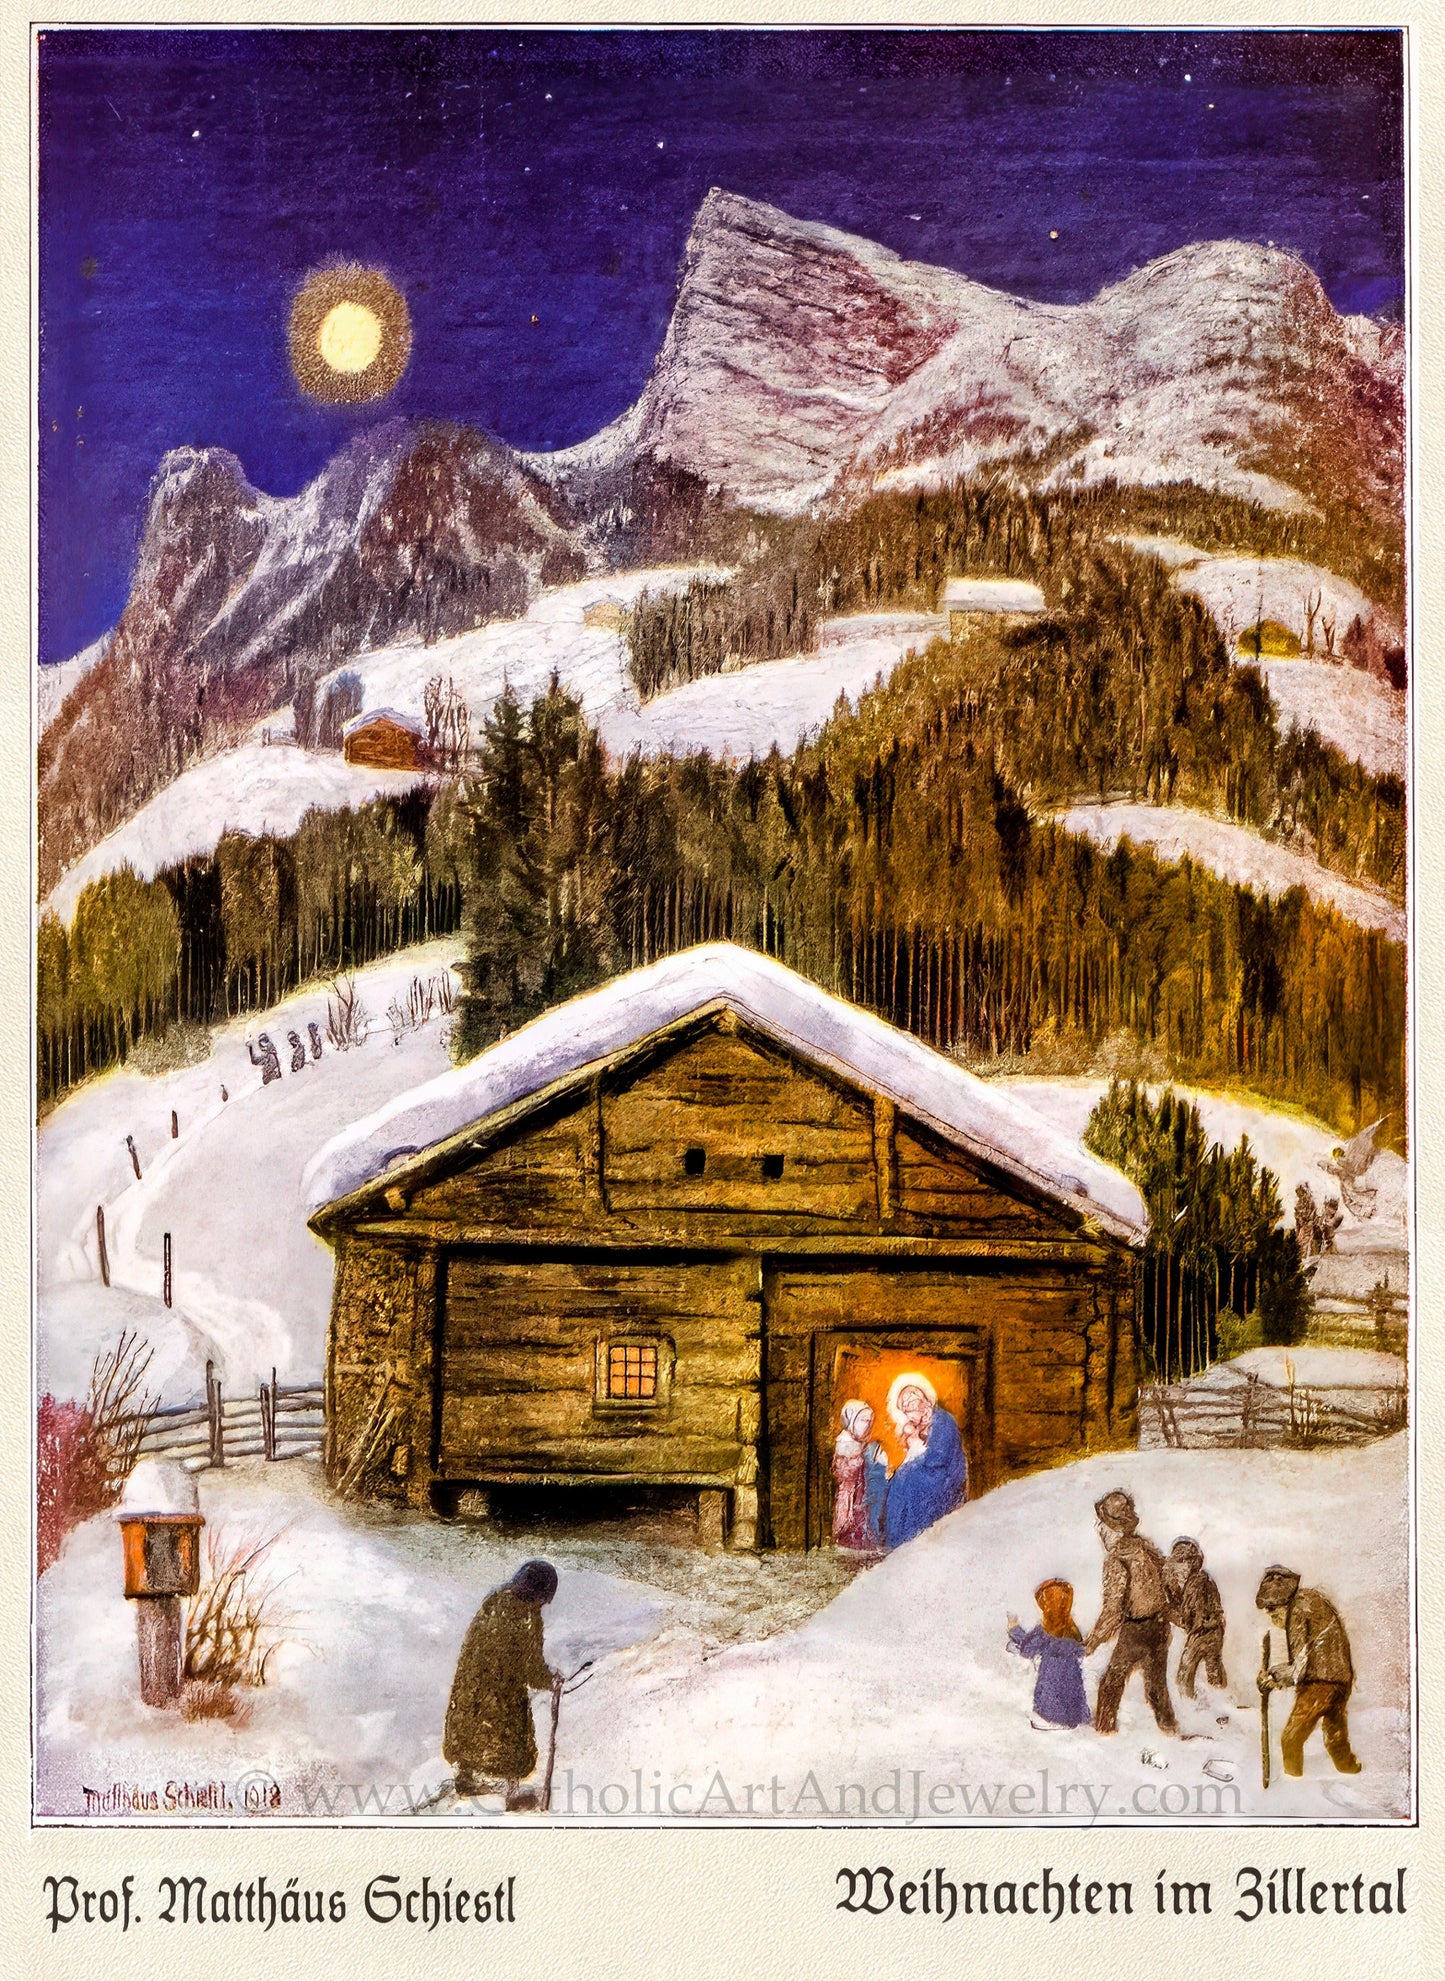 New! The Nativity – Christmas in Zillertal – Matthäus Schiestl – Beautiful Catholic Art – Archival Quality